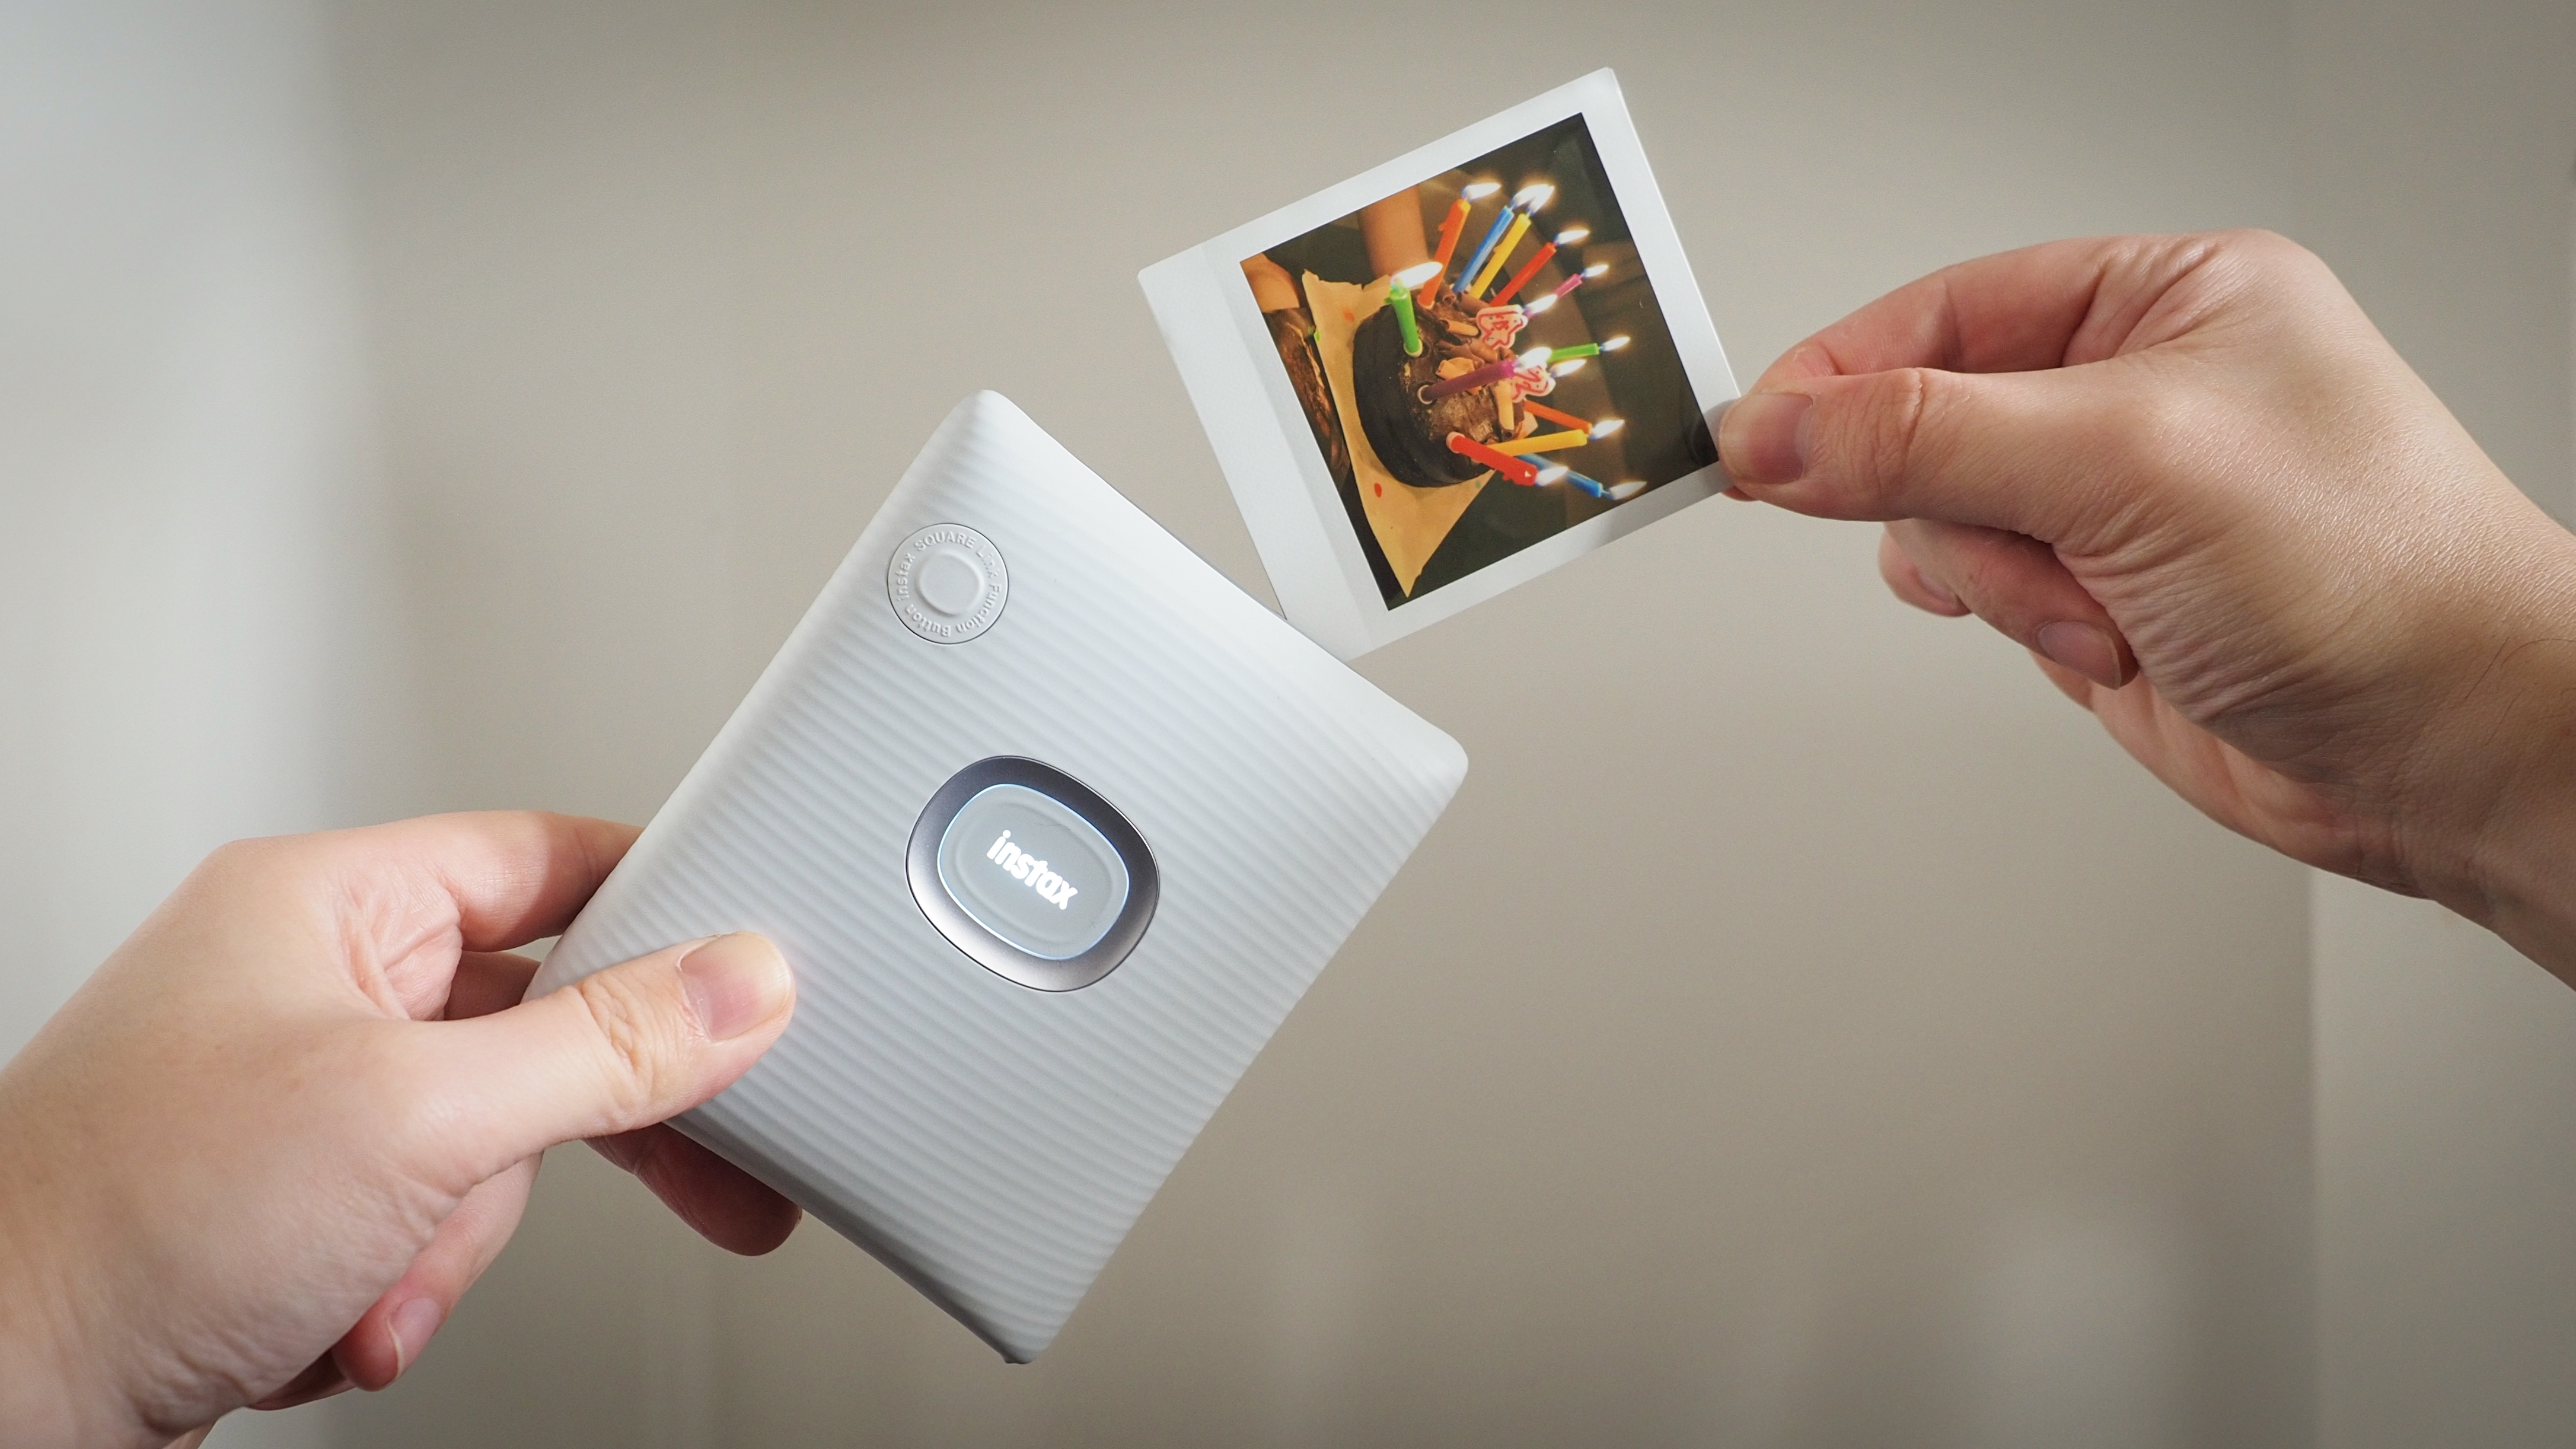 Review Fujifilm instax Square Link: Printer Smartphone Instan